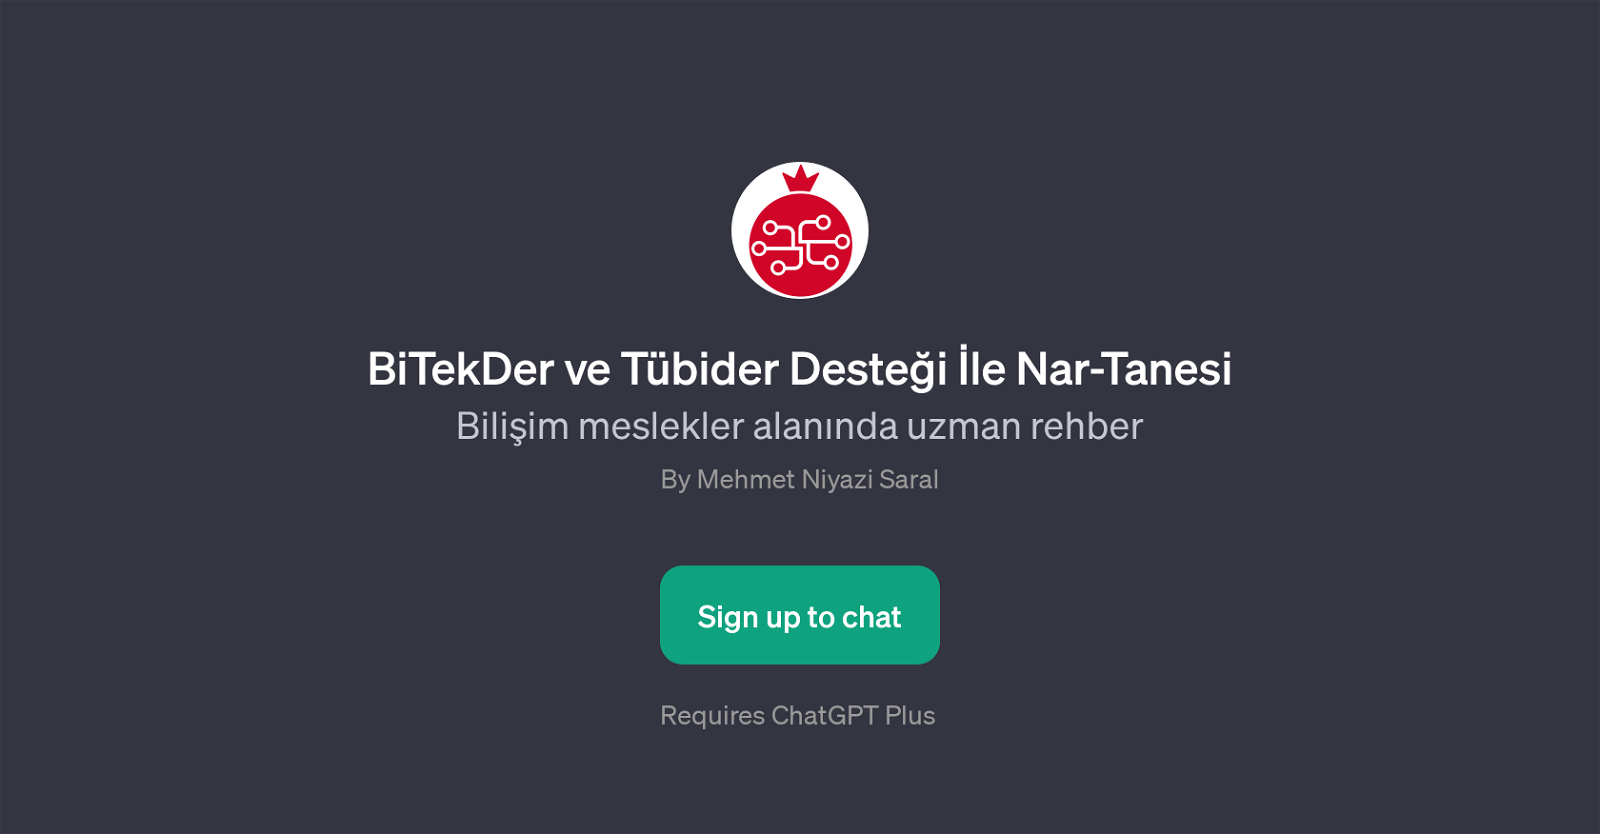 BiTekDer ve Tbider Destei le Nar-Tanesi website